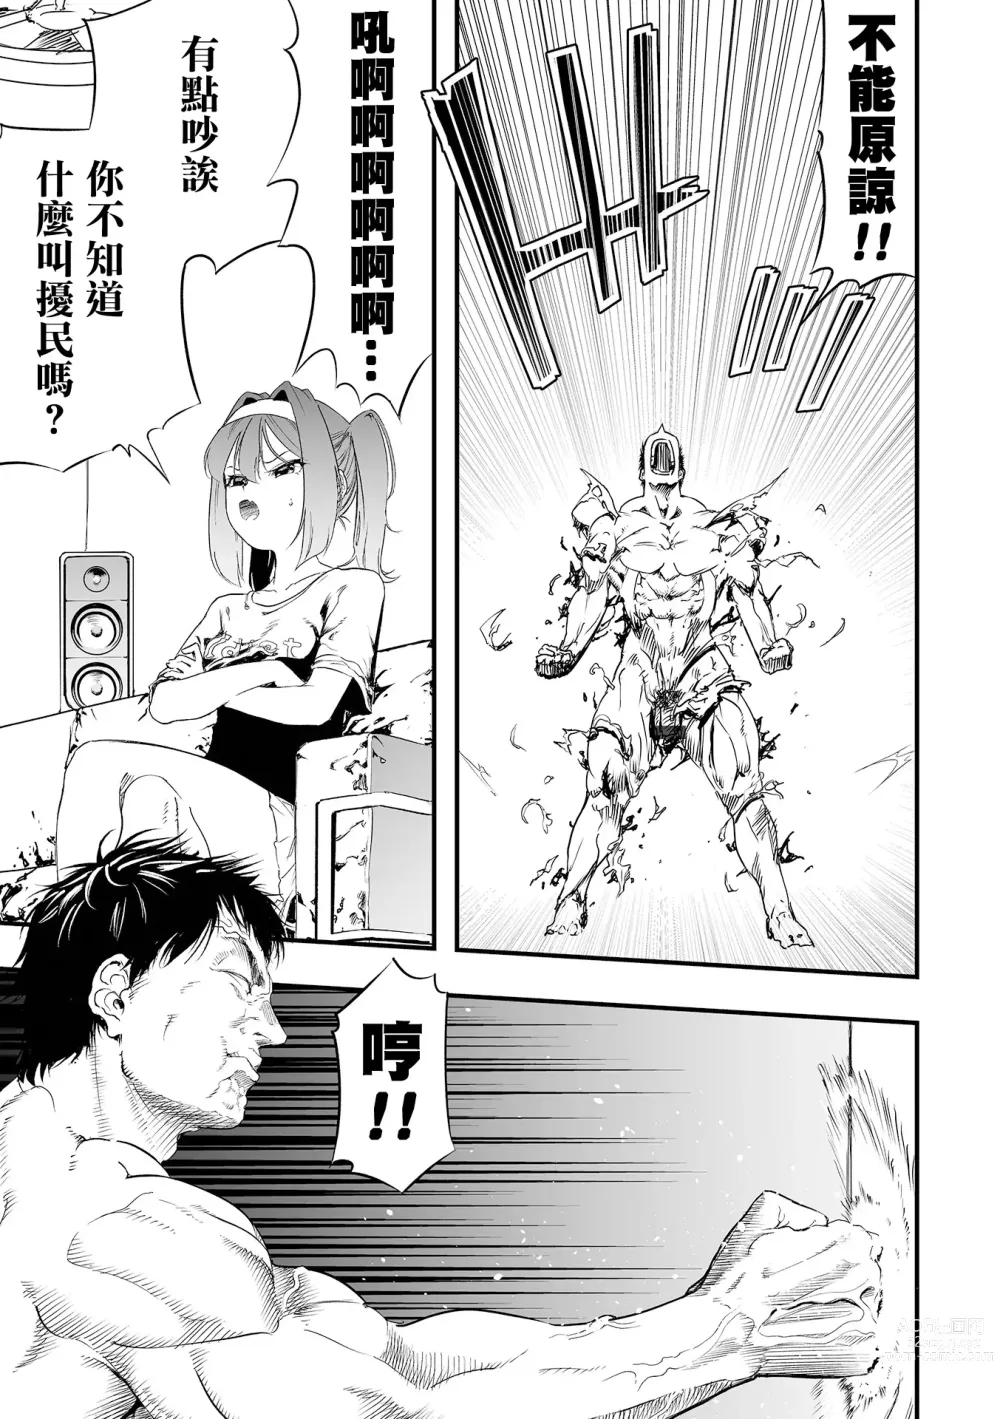 Page 4 of manga 鄰居的壁咚X